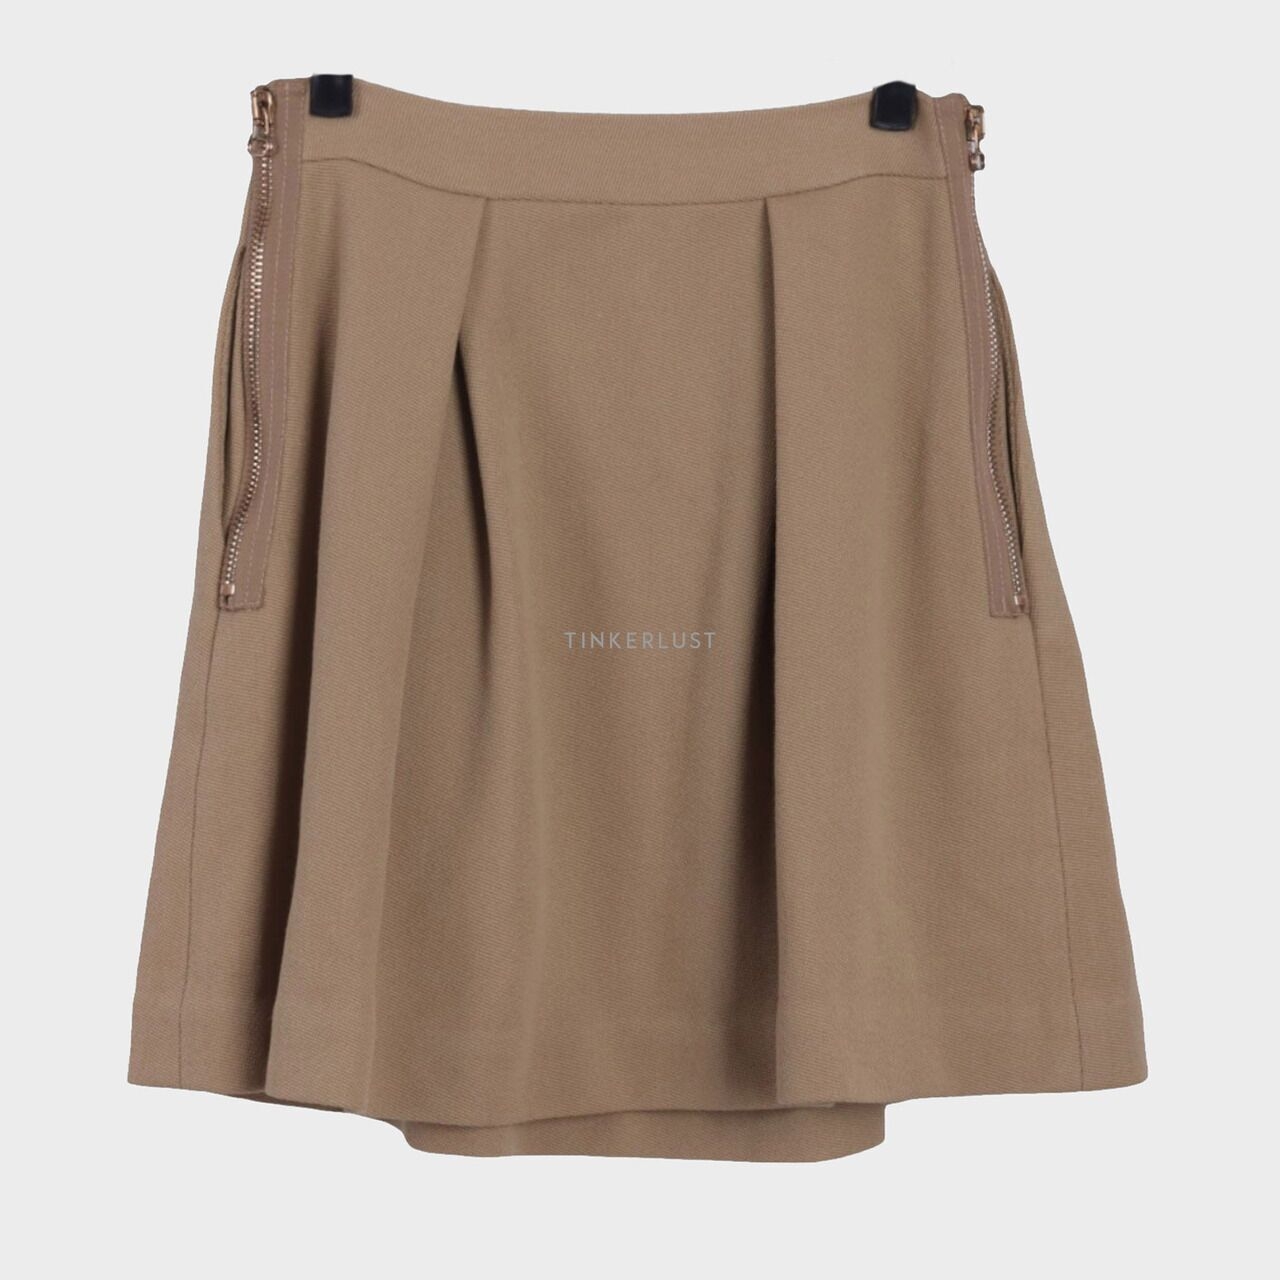 3.1 Phillip Lim Brown Mini Skirt